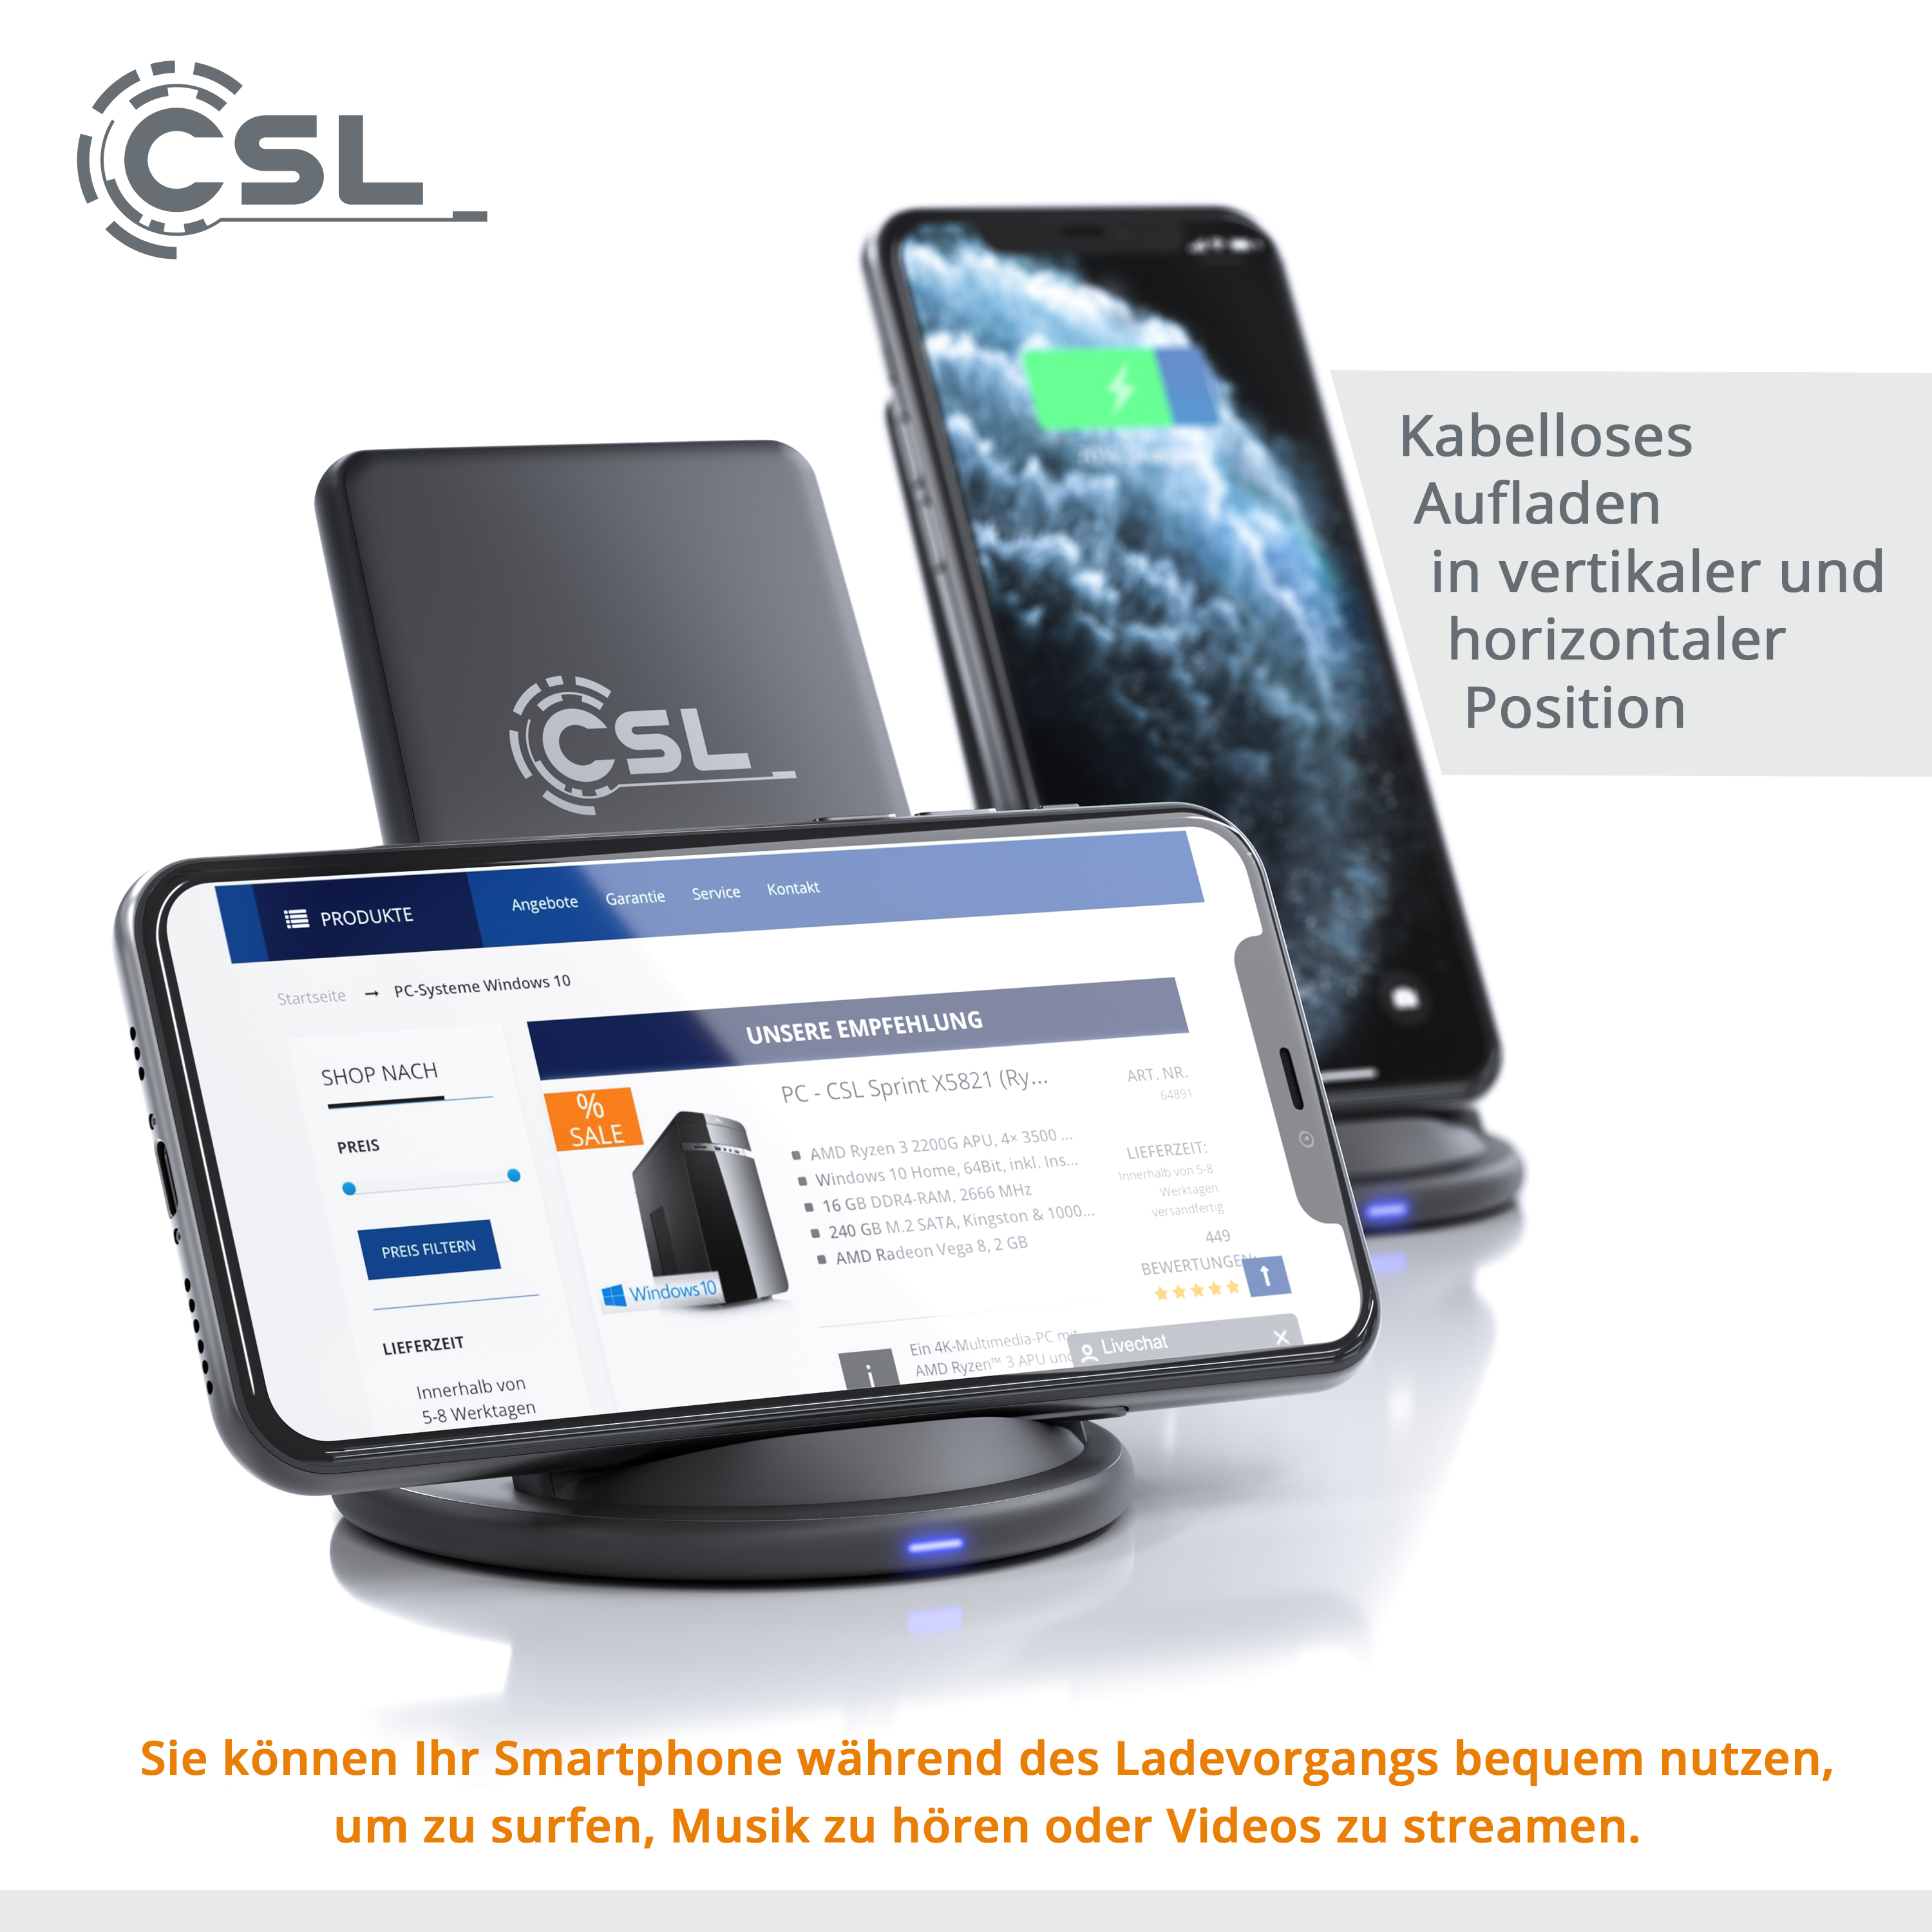 CSL Qi Universal, silber-schwarz Stand Wireless Charger Ladegerät